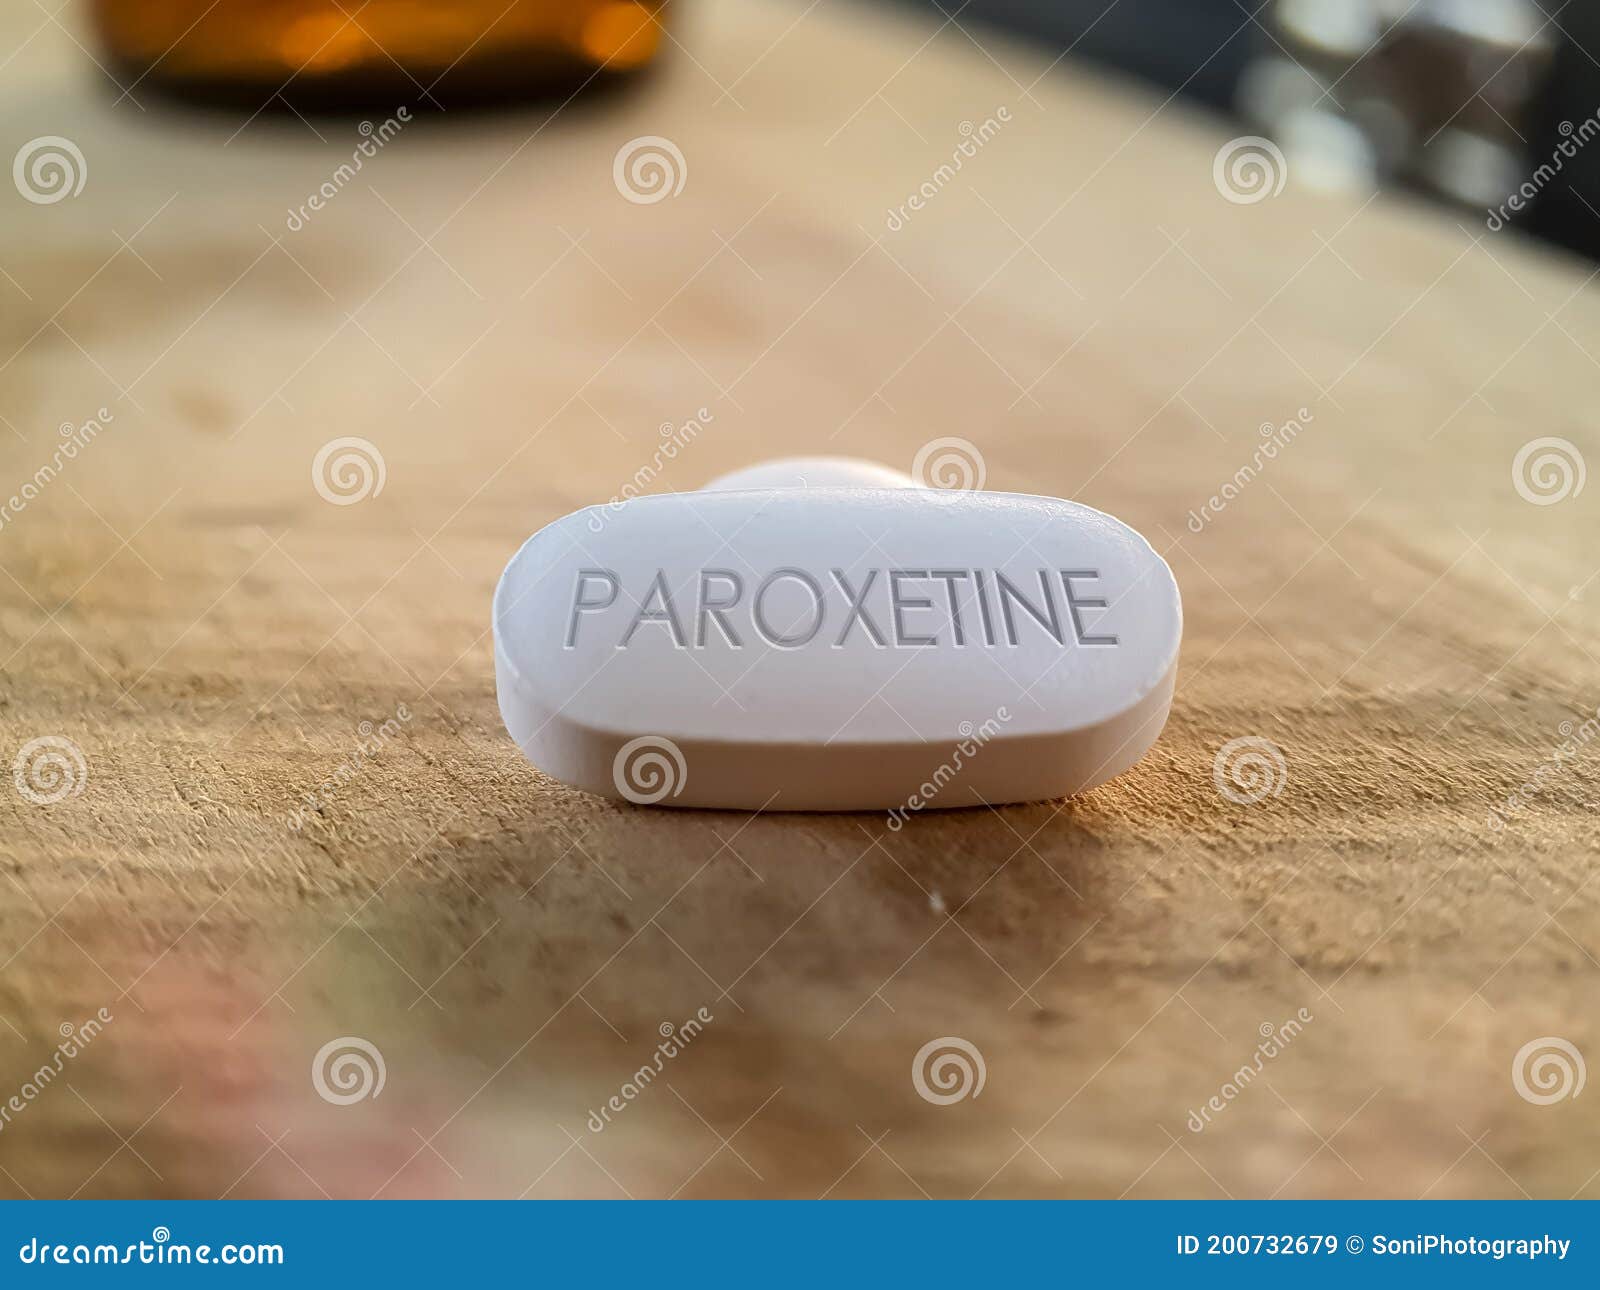 paroxetine antidepressant drug medication pill